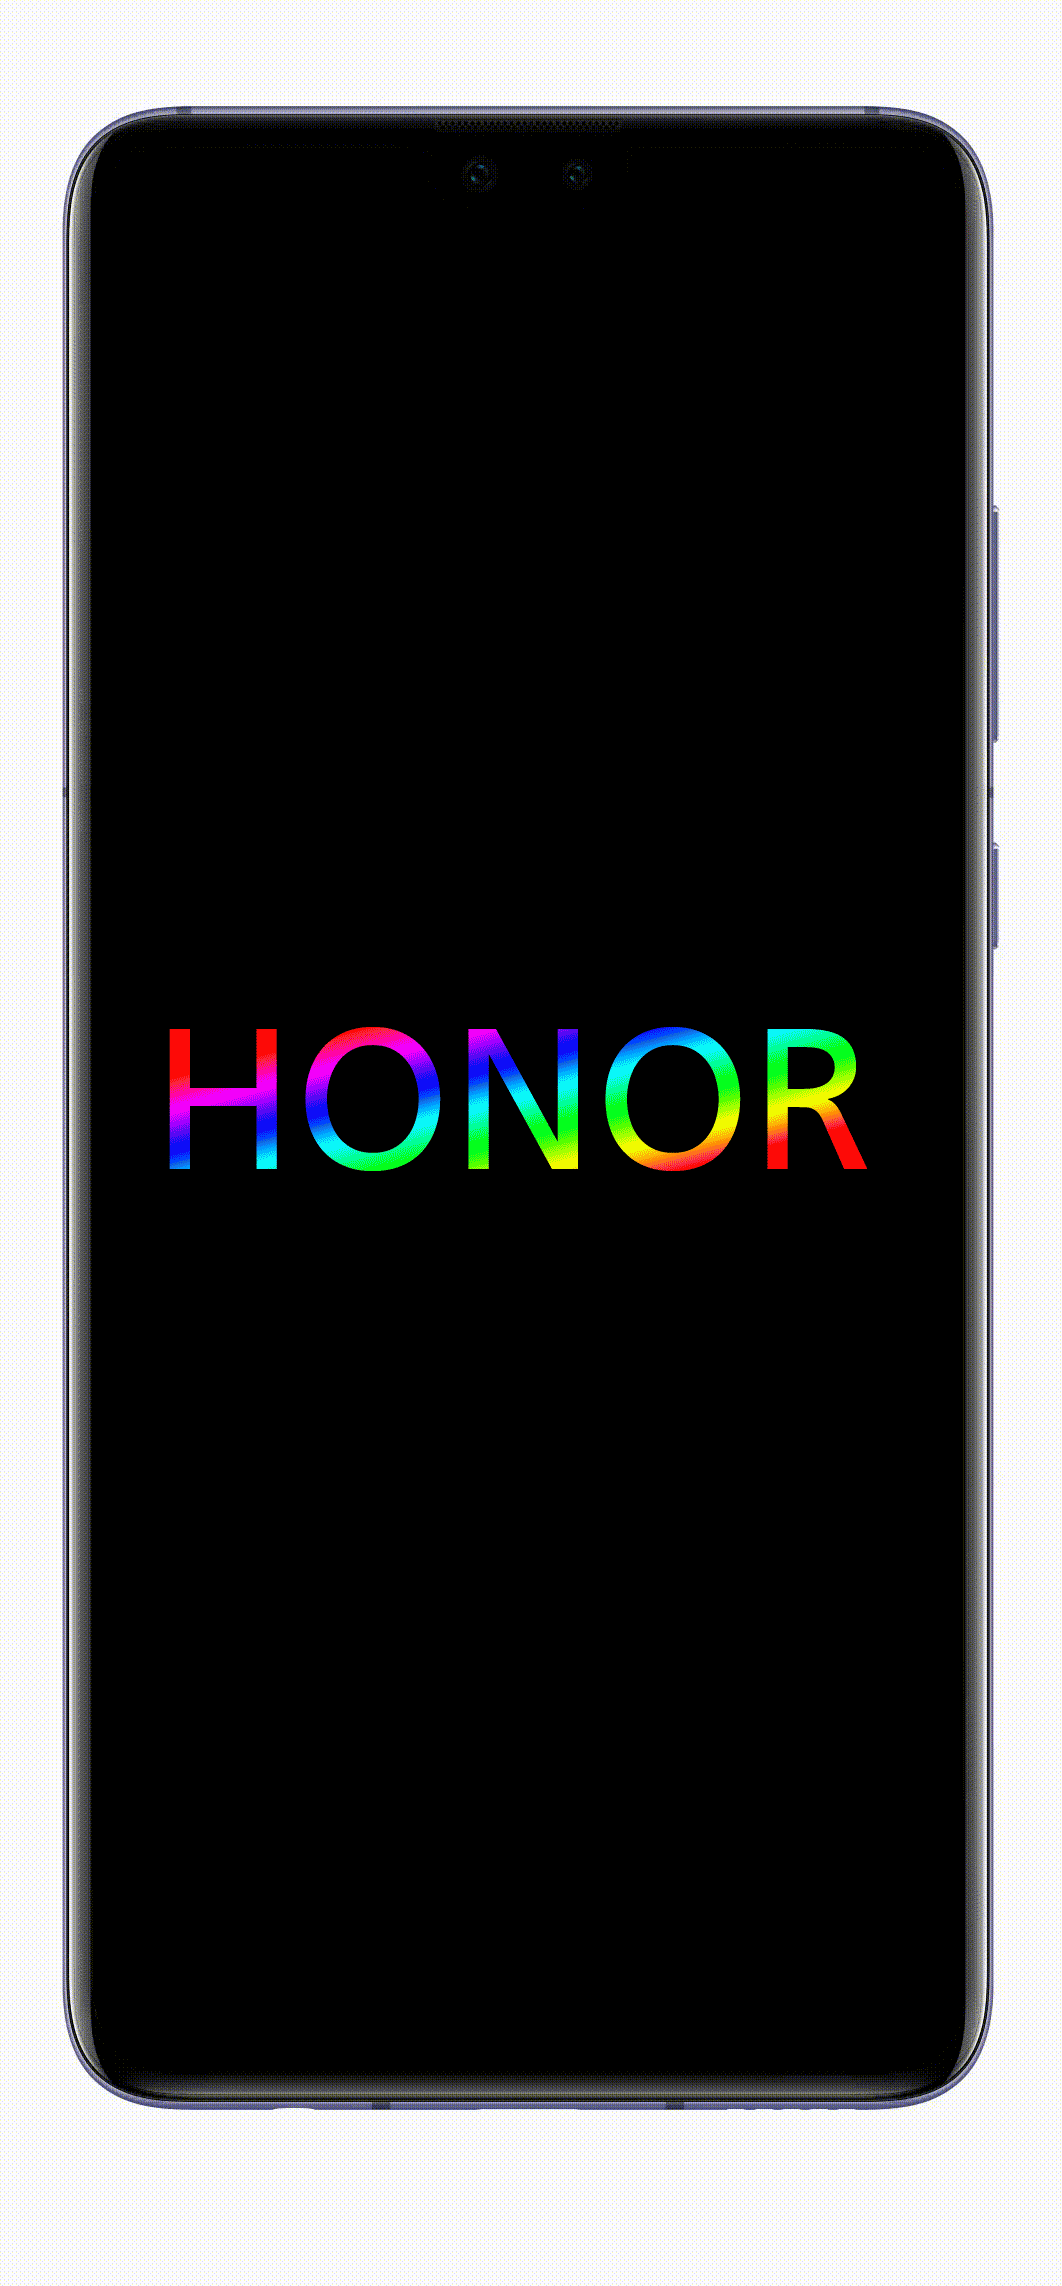 EMUIتثبيت-تحديث-هاتف-Honor-8X-الي-احدث-إصدار-EMUI-10